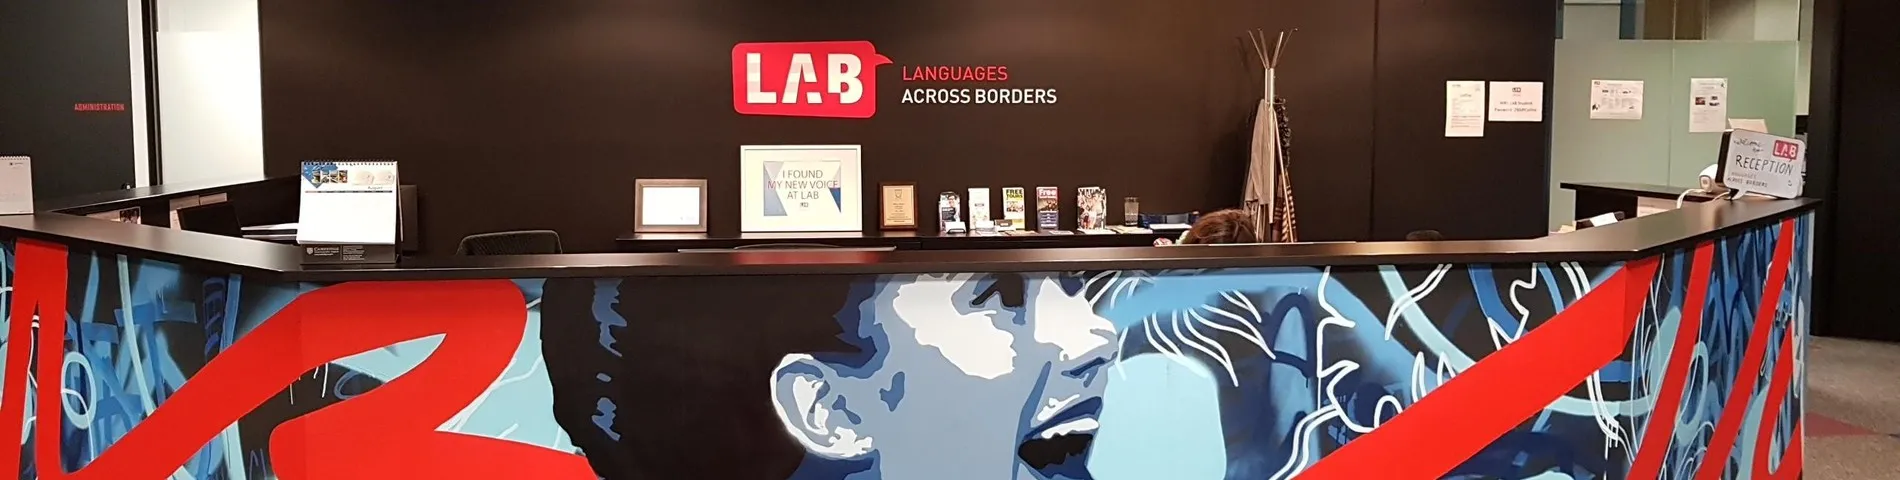 LAB - Languages Across Borders afbeelding 1